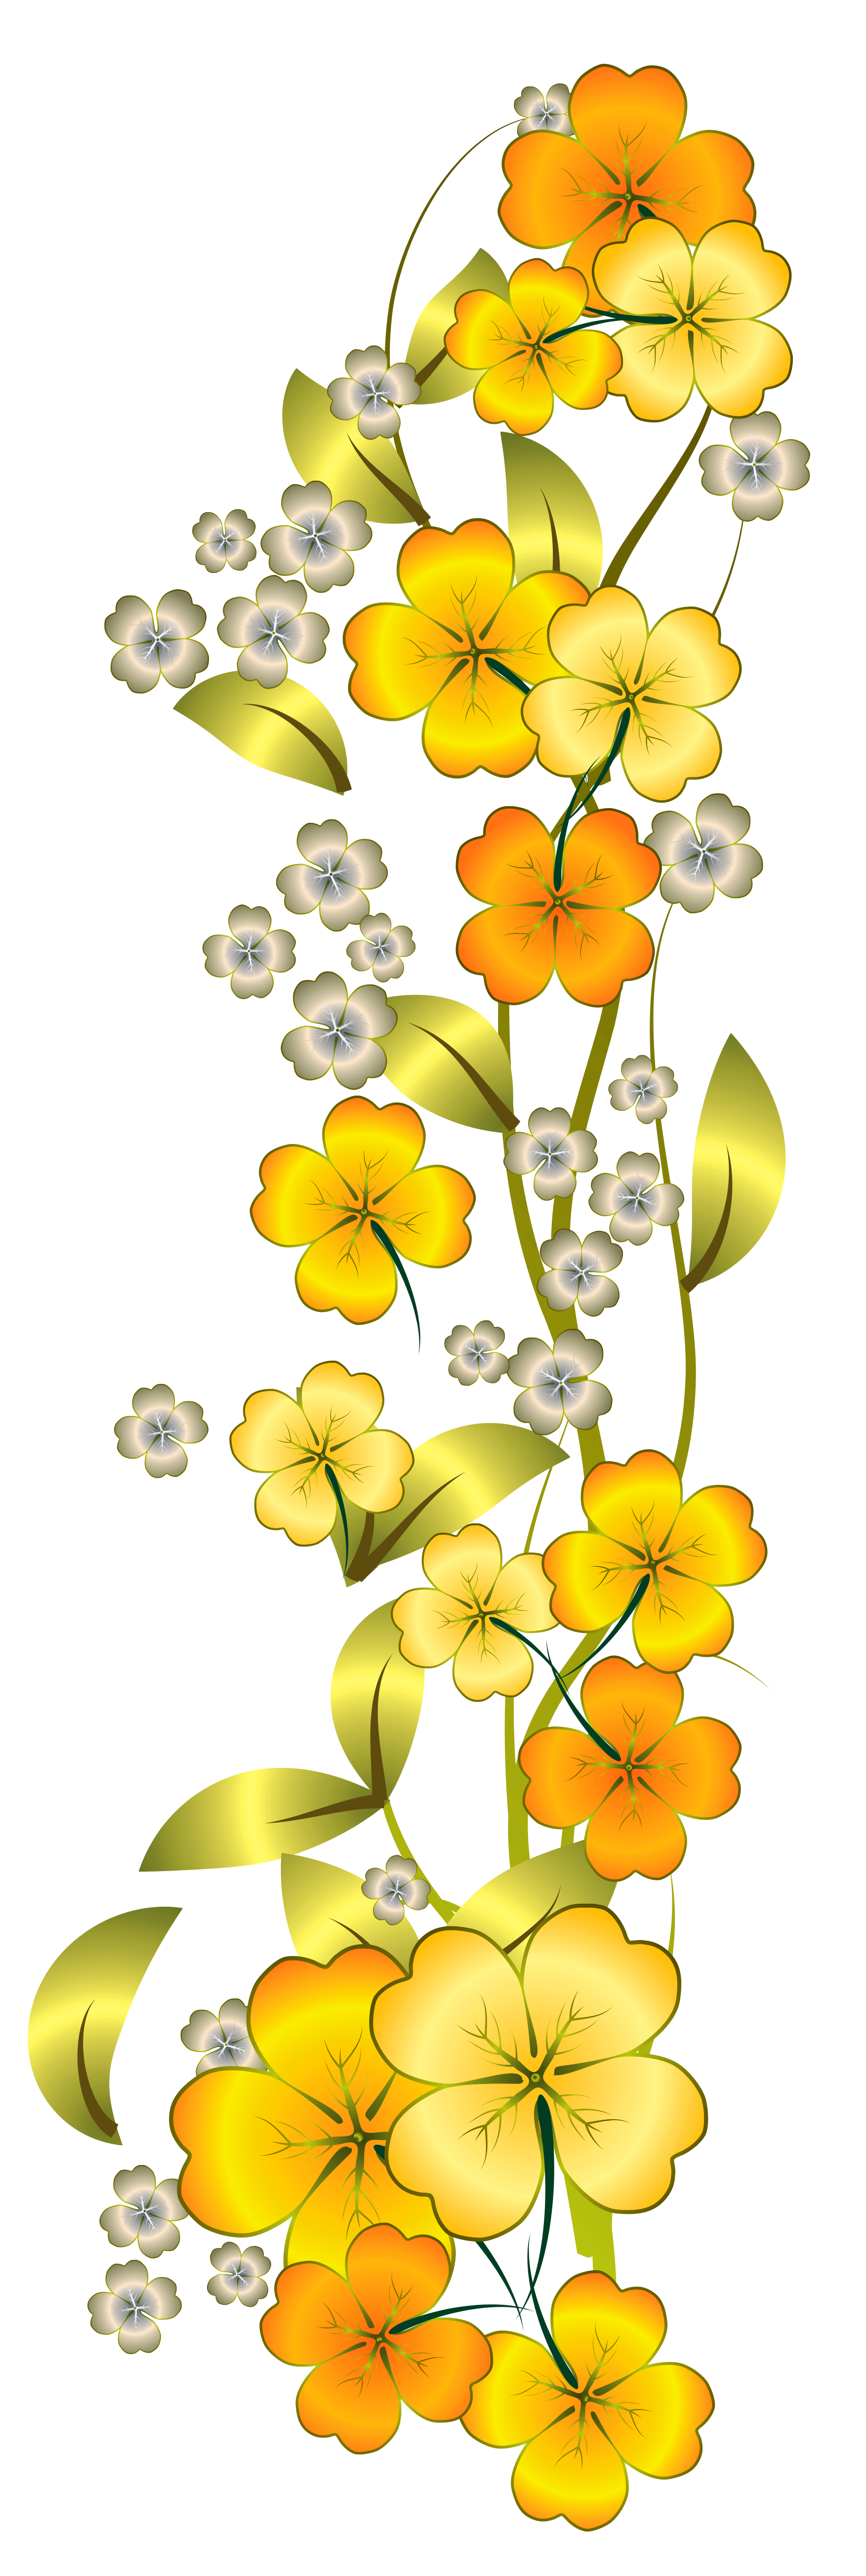 Vines clipart yellow flower. Decor png flowers pinterest